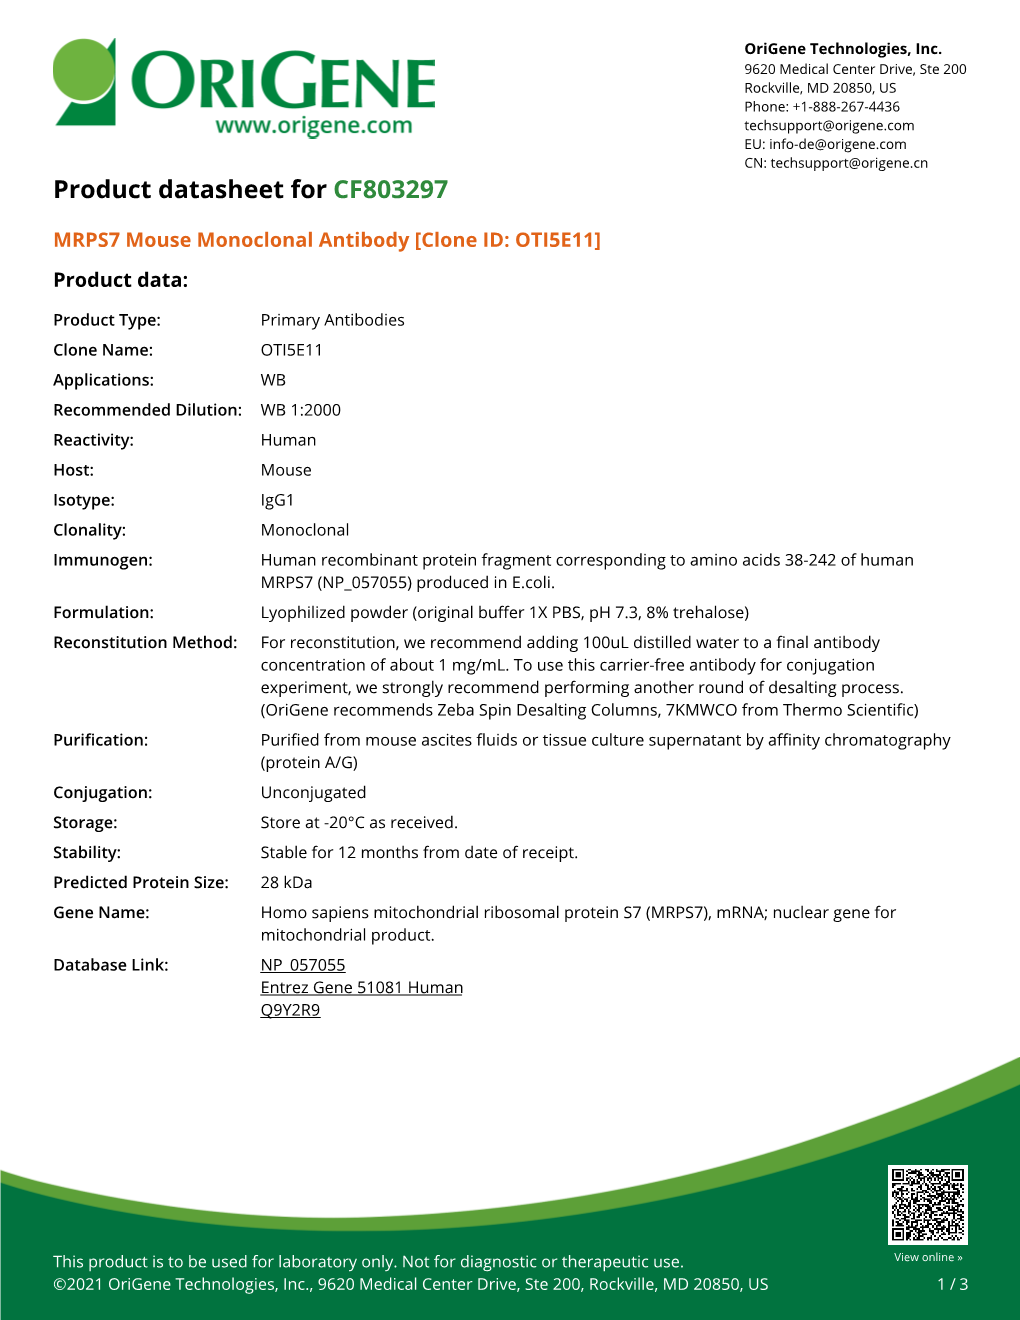 MRPS7 Mouse Monoclonal Antibody [Clone ID: OTI5E11] Product Data